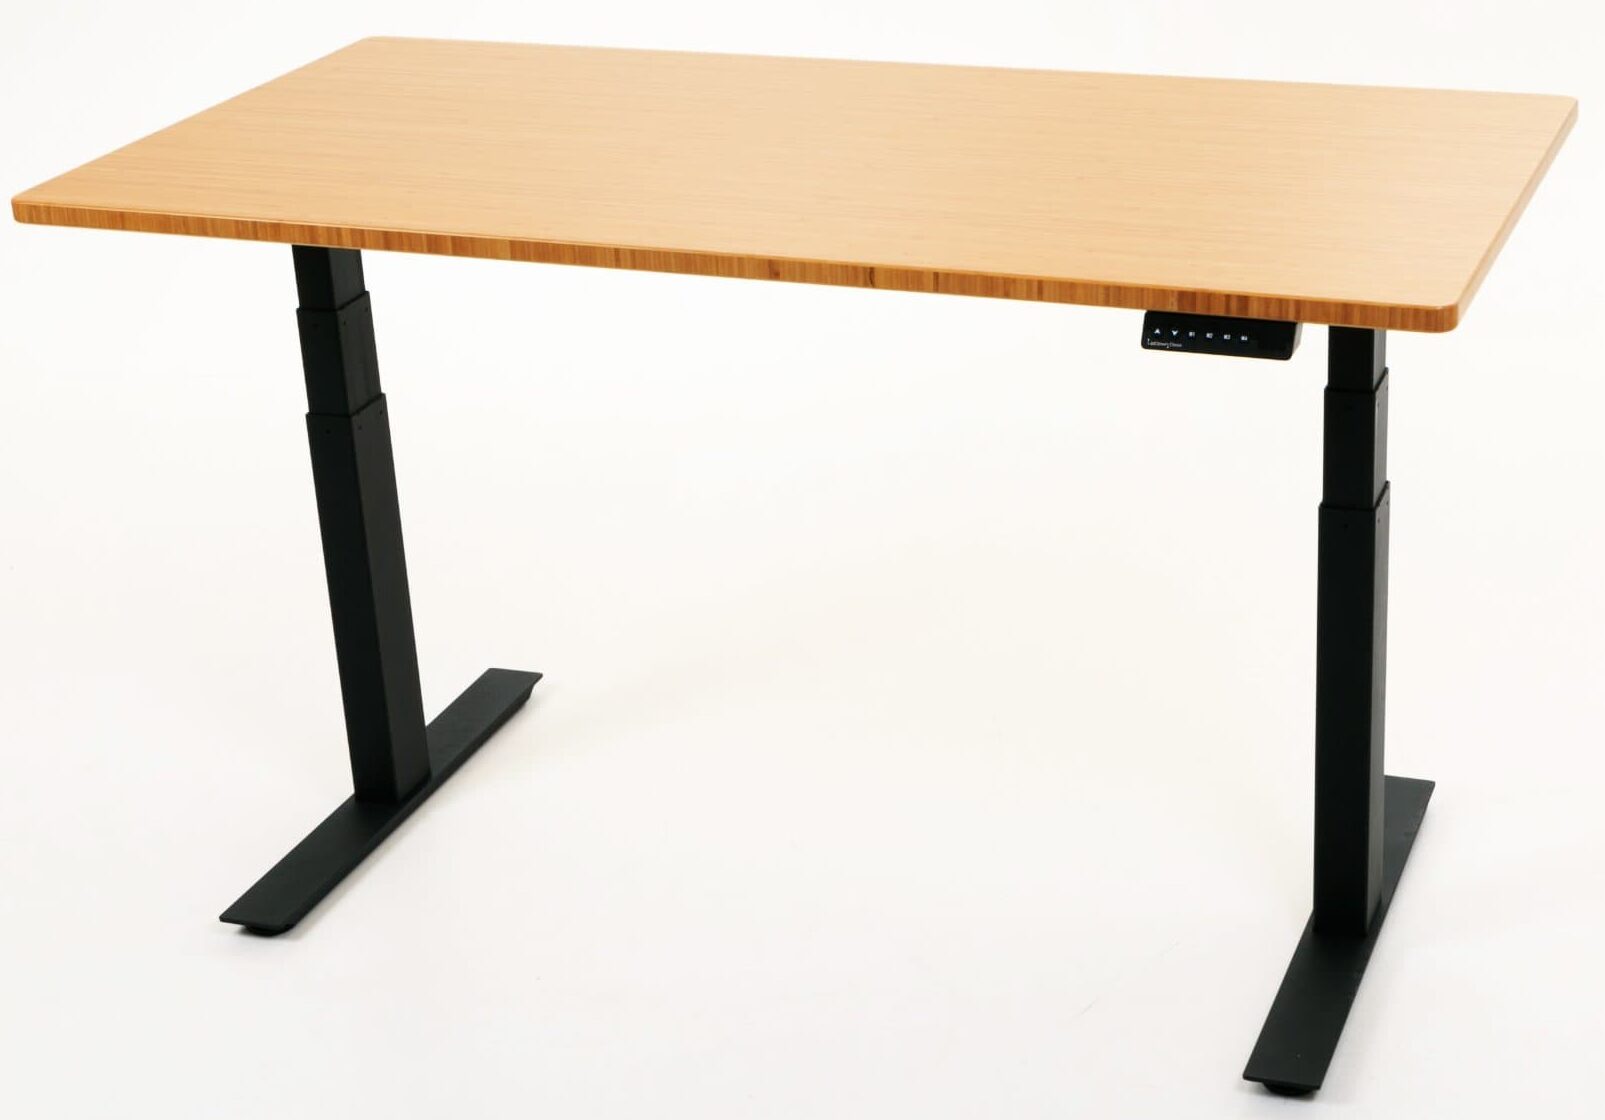 UpDown Desk PRO Series Electric Standing Desk with Bamboo Desktop